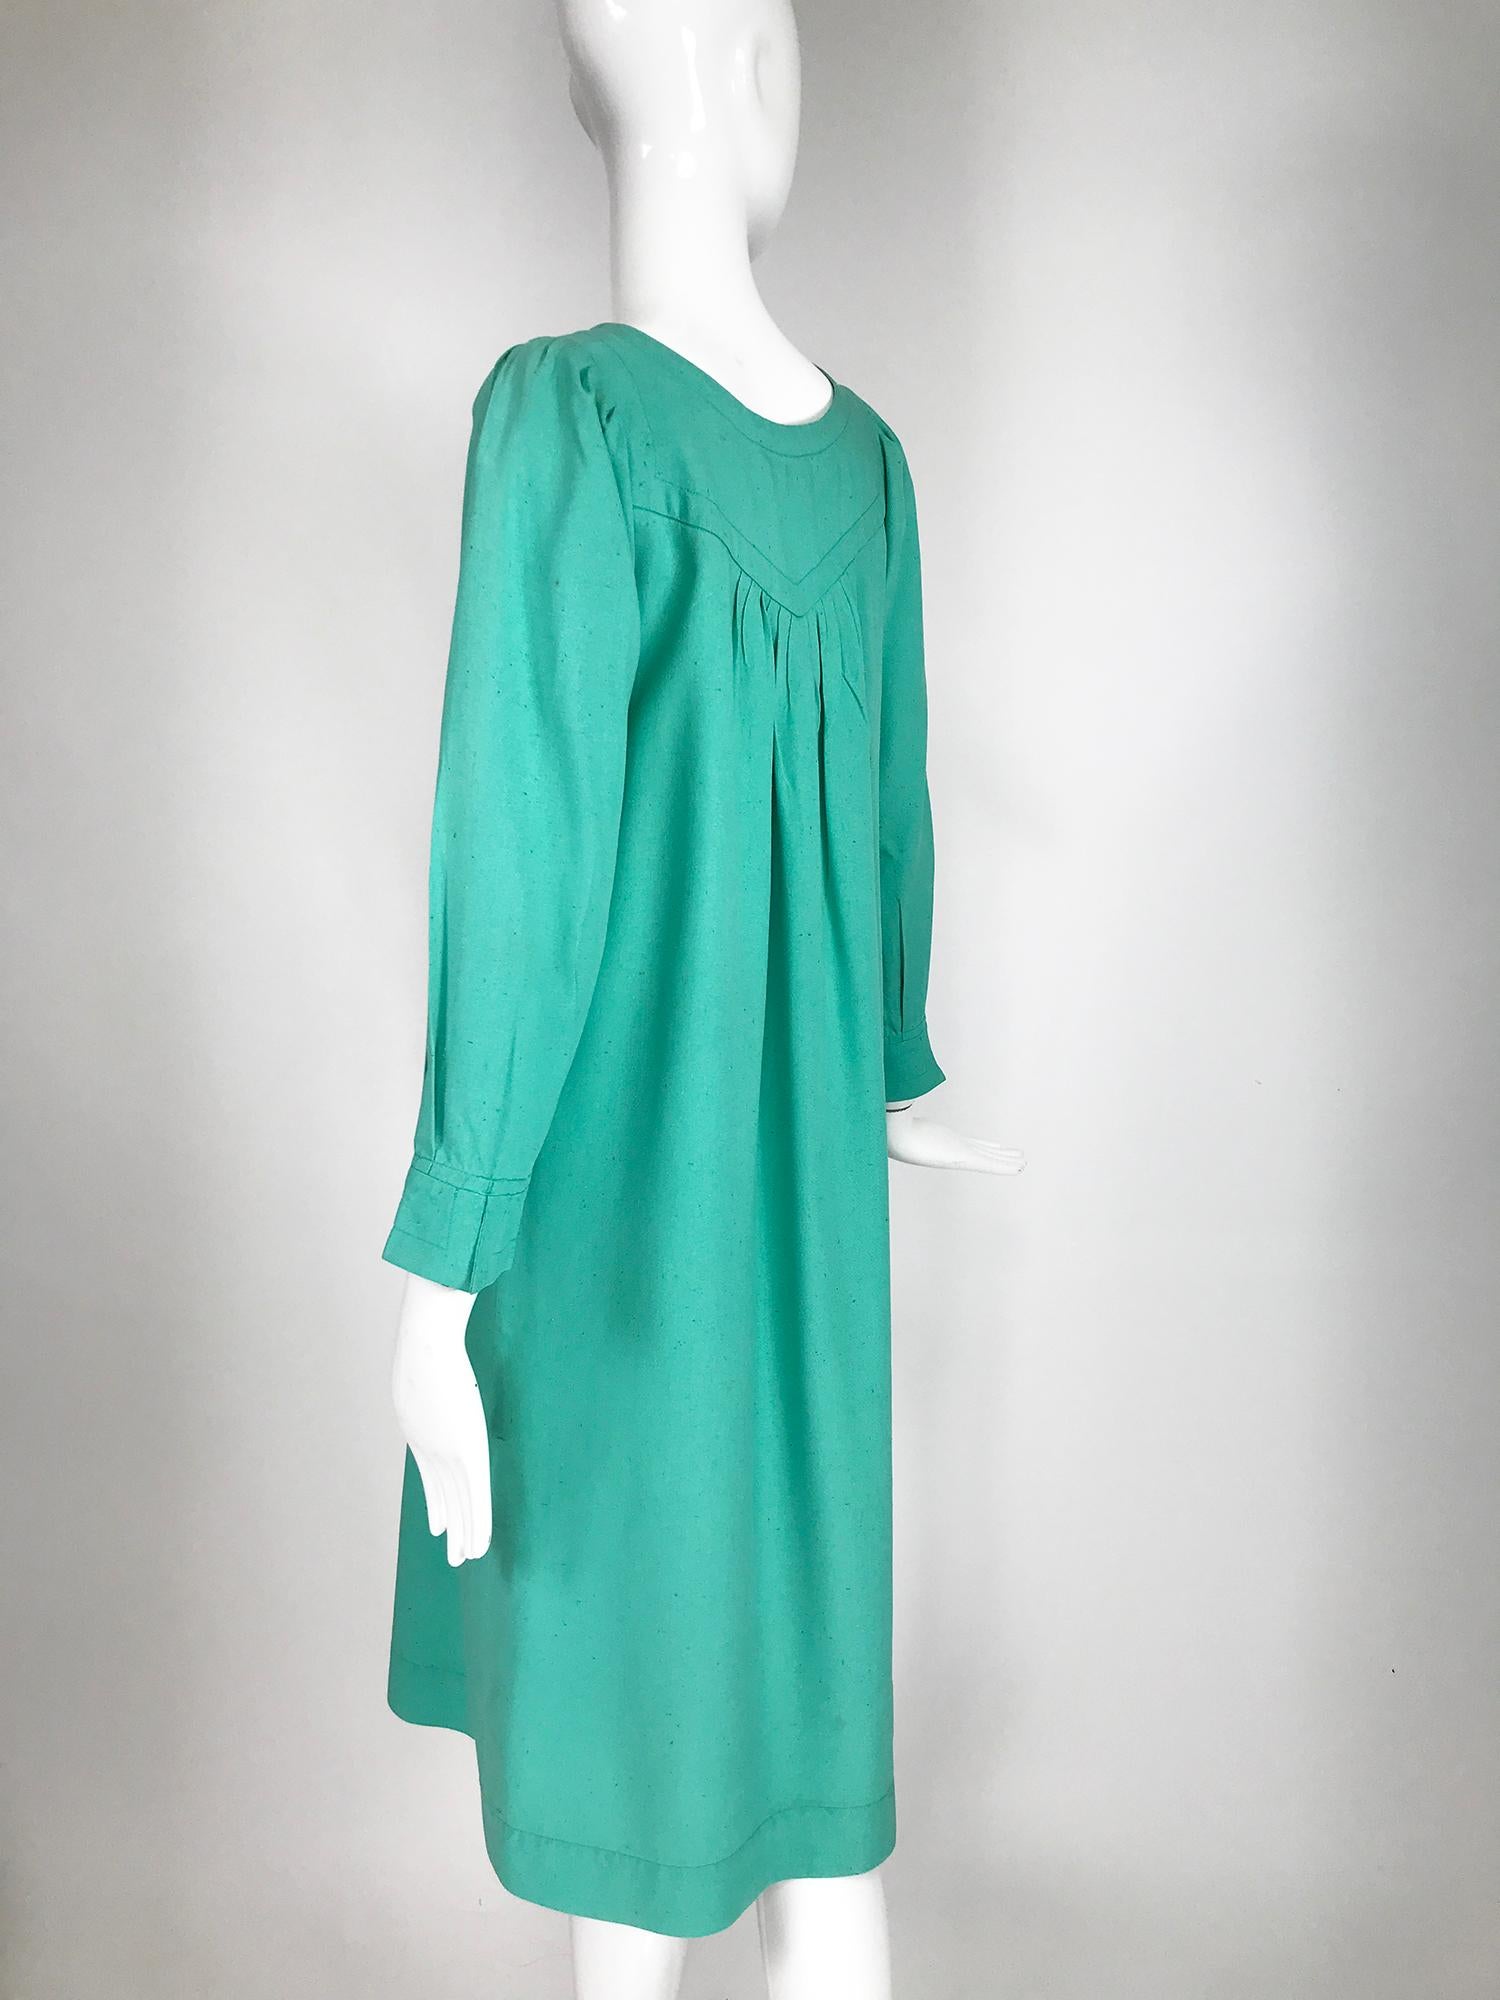 Yves Saint Laurent Rive Gauche Aqua Slub Silk Smock Dress 1970s 2